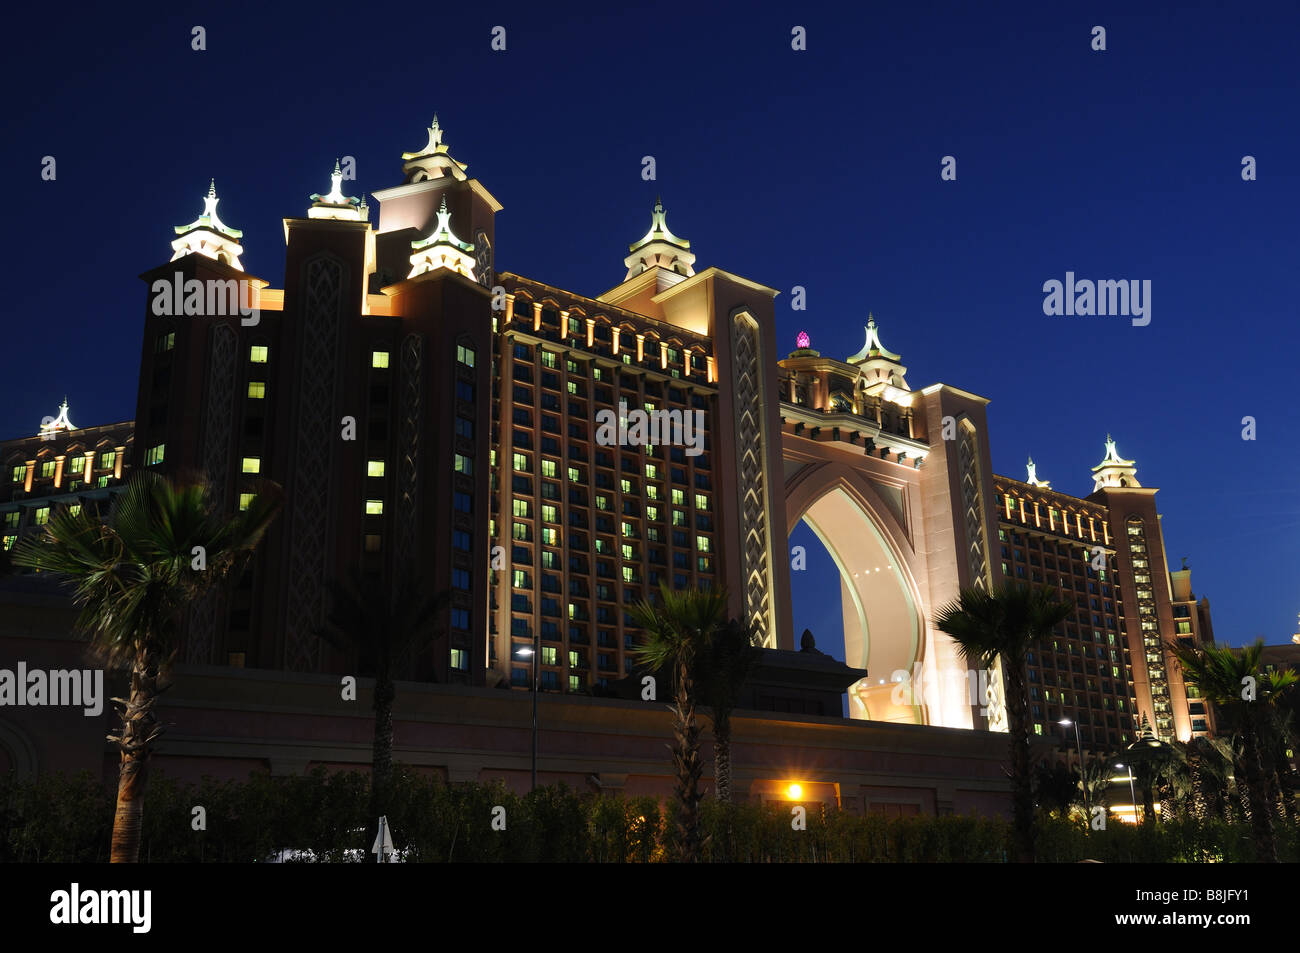 Hotel Atlantis on the Palm Jumeirah in Dubai, United Arab Emirates Stock Photo